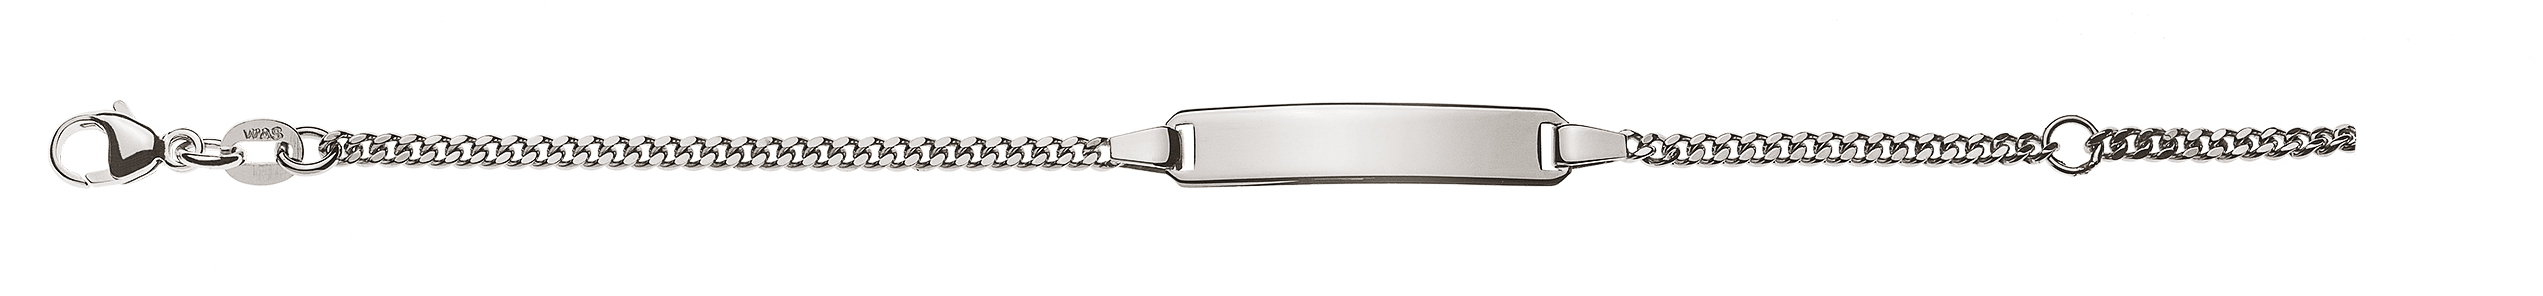 AURONOS Style ID-Bracelet 9k white gold curb chain polished 14cm